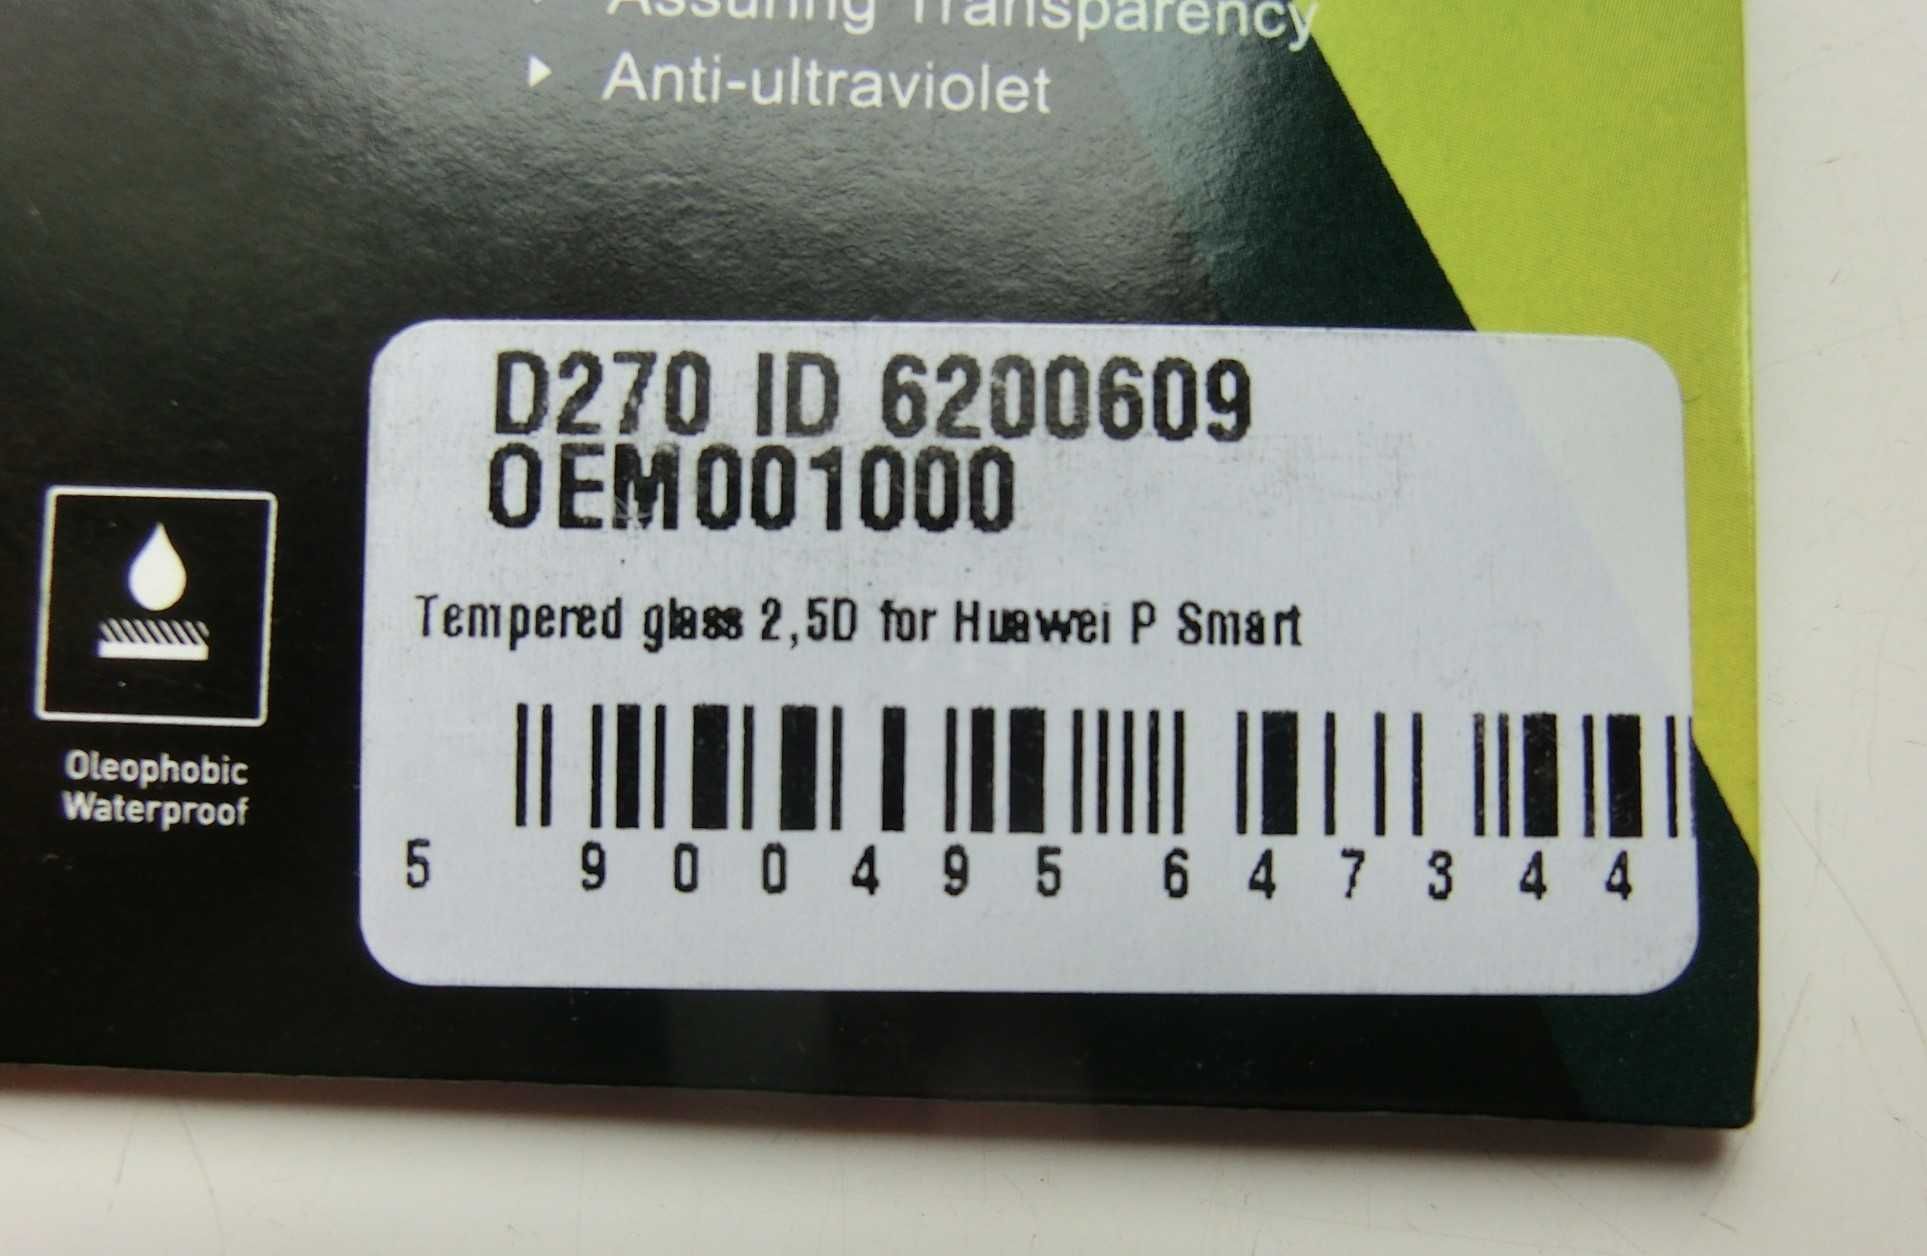 Etui Smart Magnet do Huawei P Smart + 4 szkła hartowane